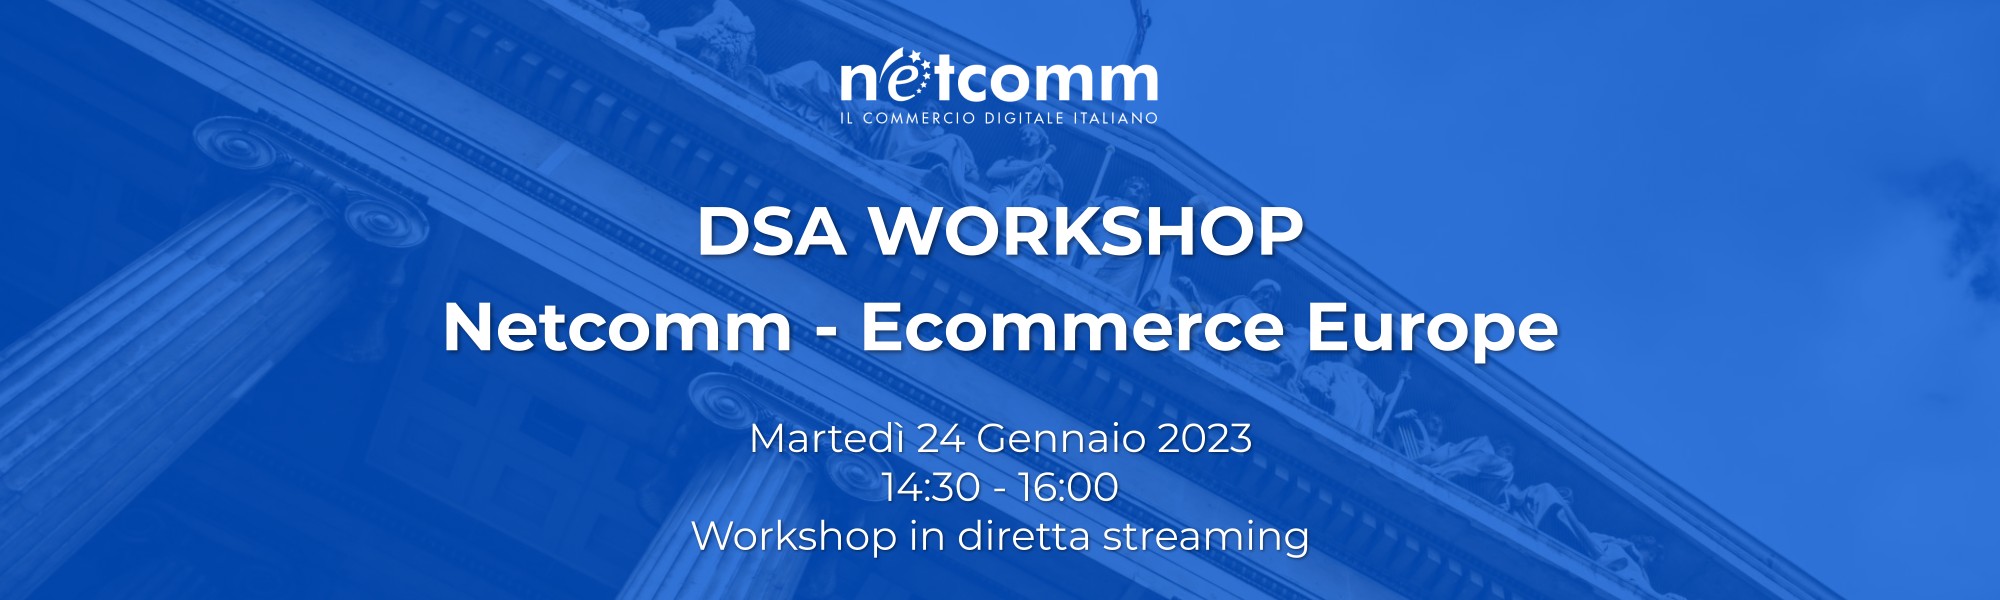 DSA Workshop Netcomm-Ecommerce Europe